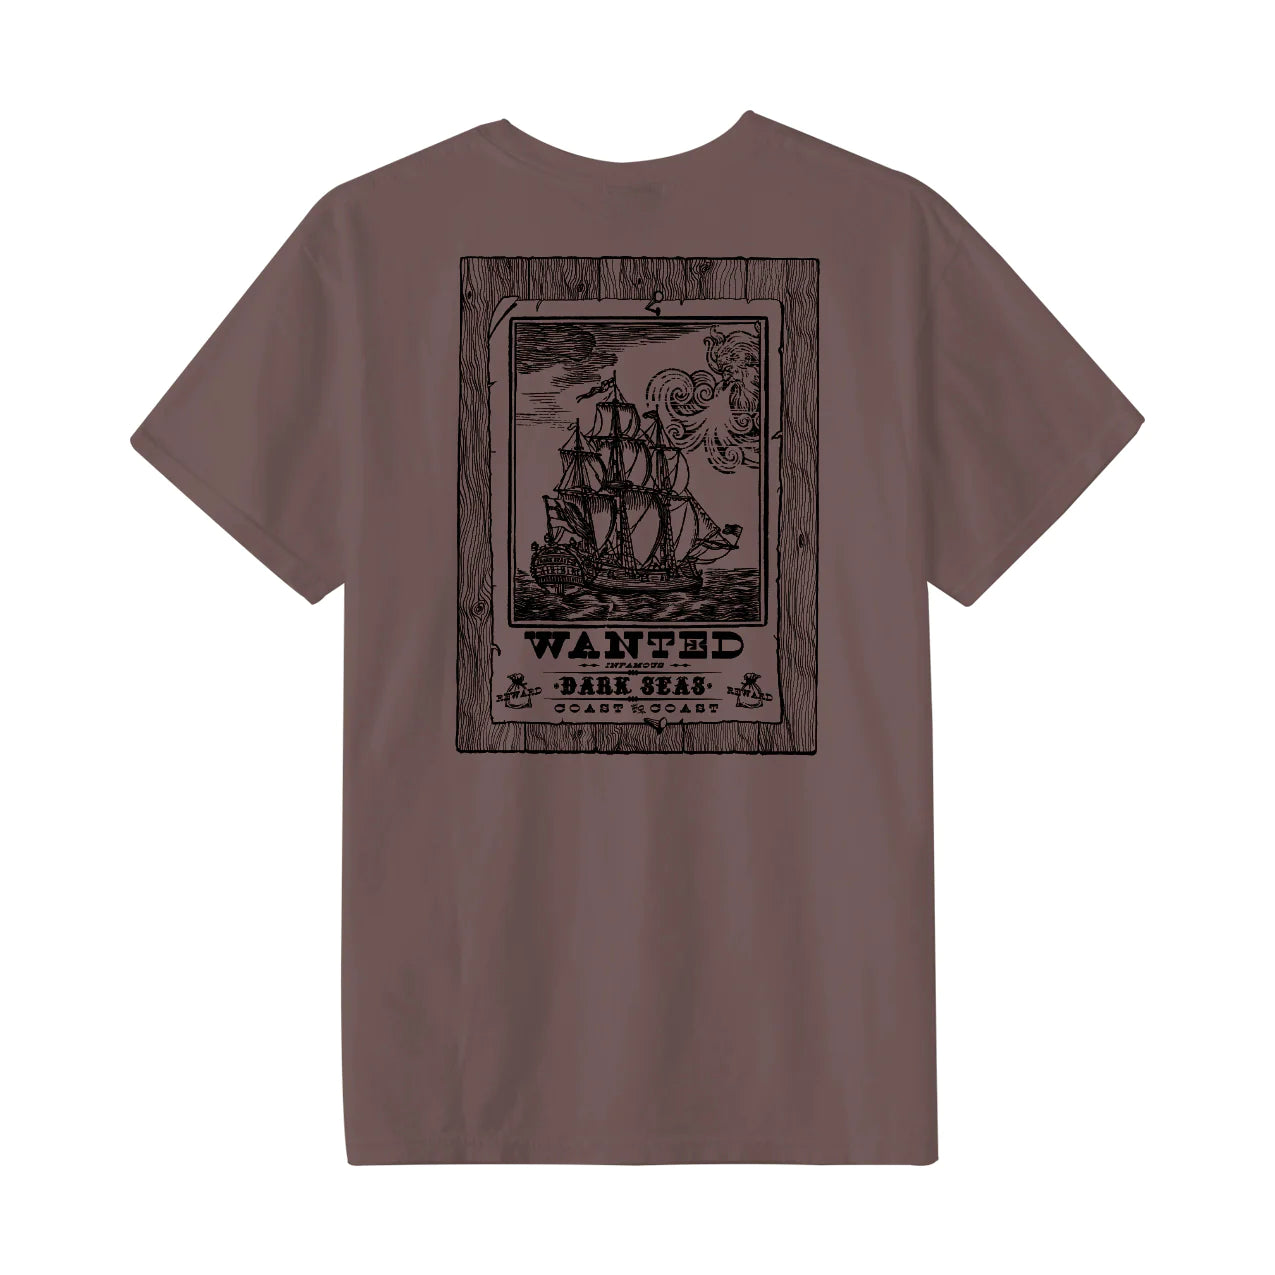 DARK SEAS Wanted T-Shirt Deep Taupe Men's Short Sleeve T-Shirts Dark Seas 